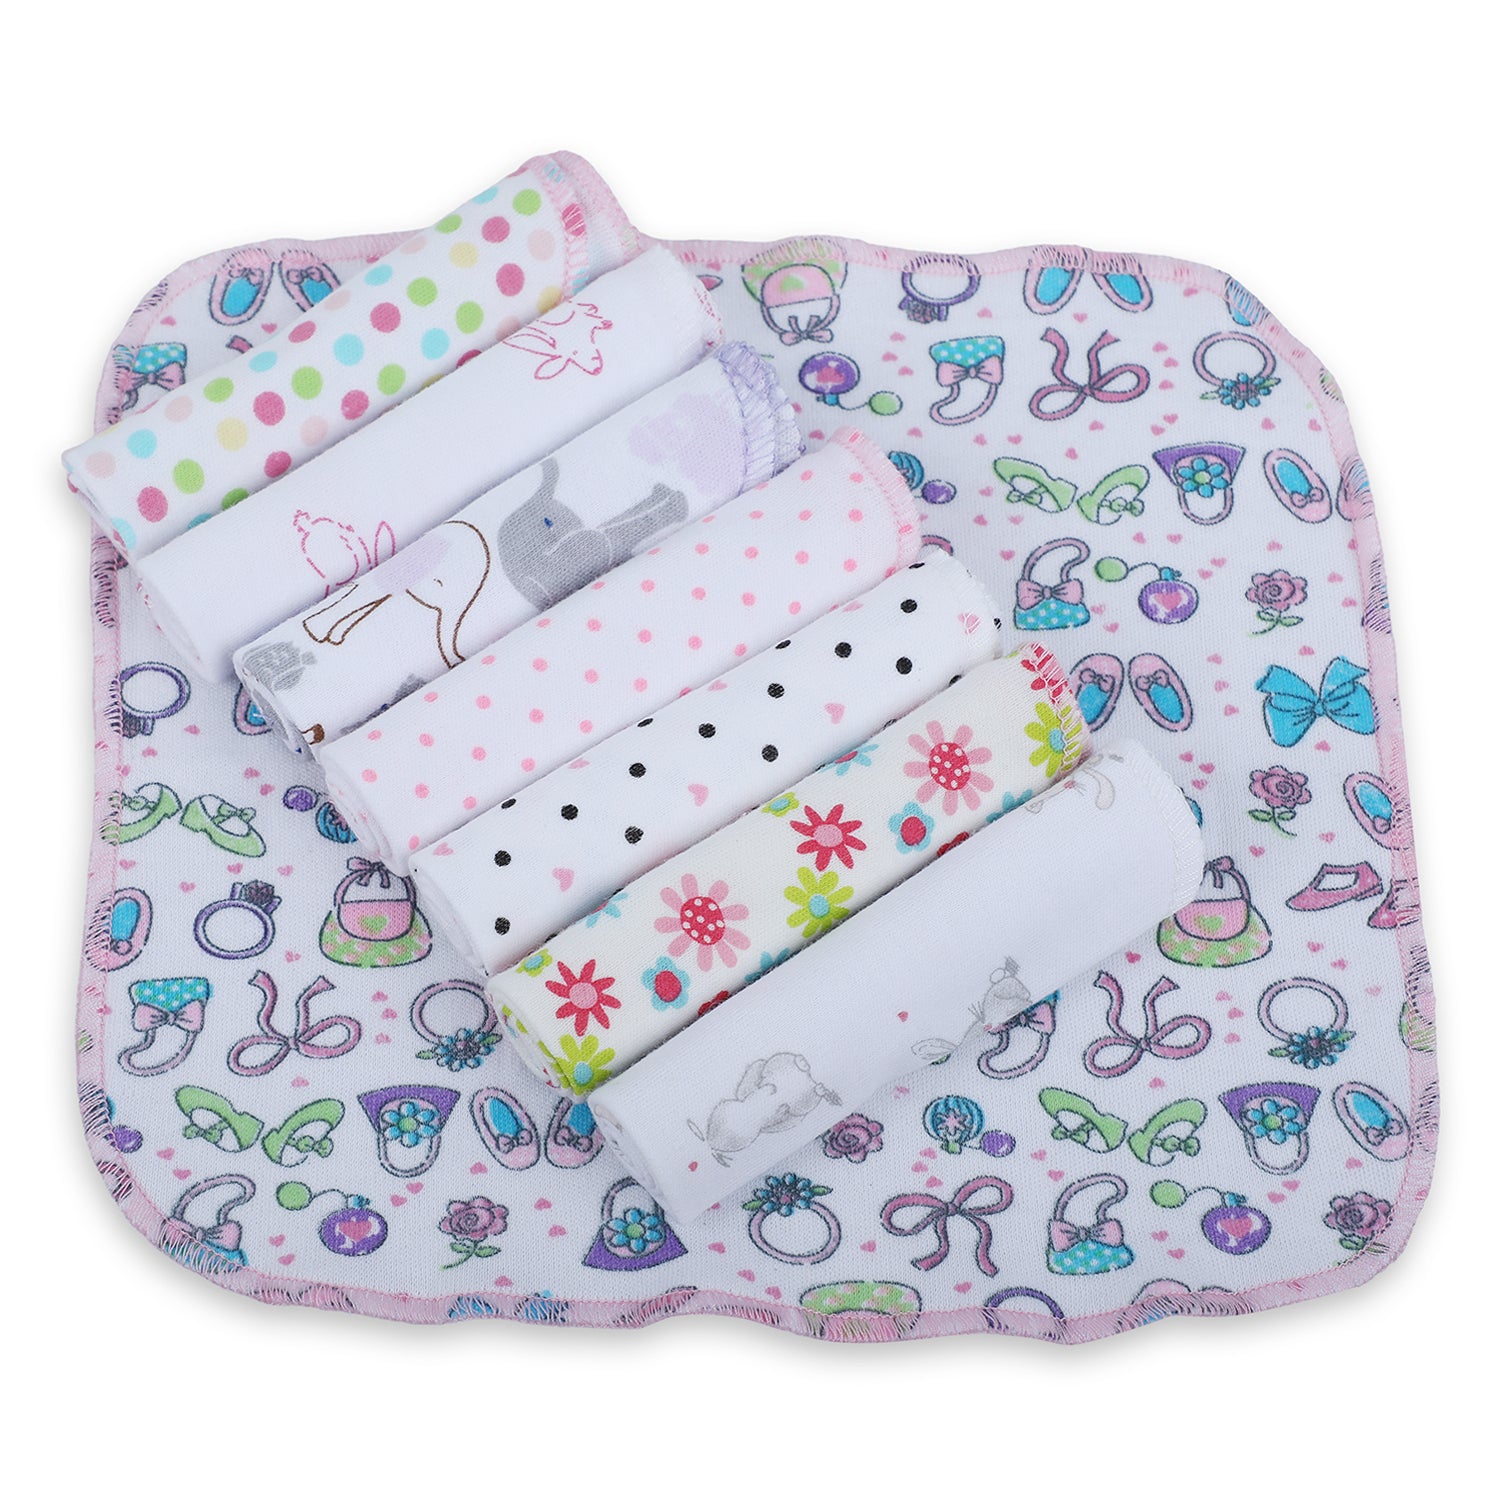 Baby Moo Girls Theme Cotton 20 x 20 cm Soft Hosiery Wash Cloth - Multicolour - Baby Moo